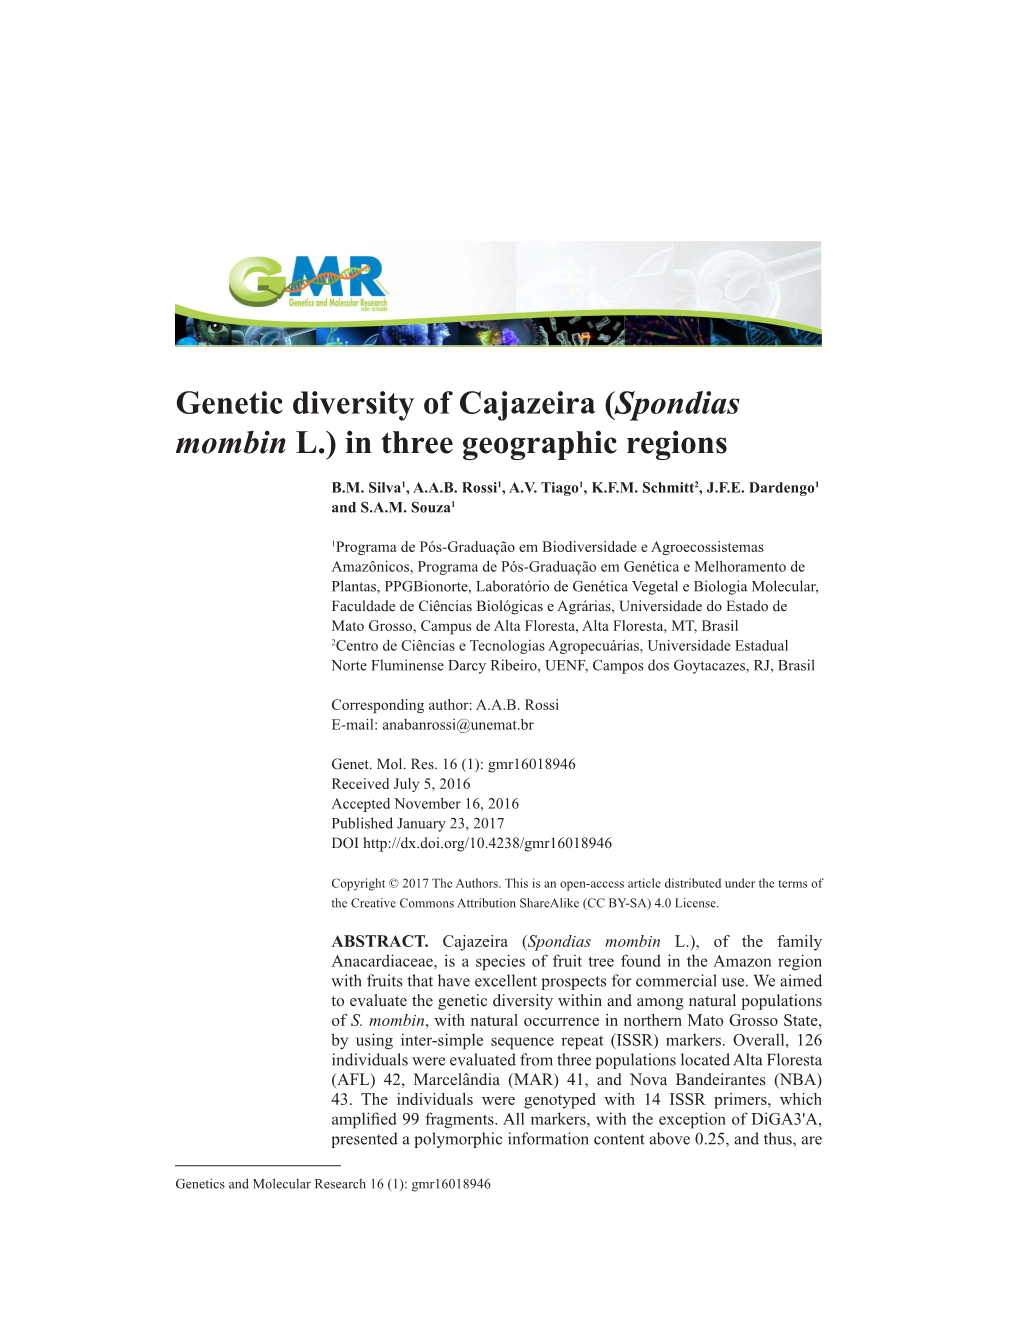 Genetic Diversity of Cajazeira (Spondias Mombin L.) in Three Geographic Regions